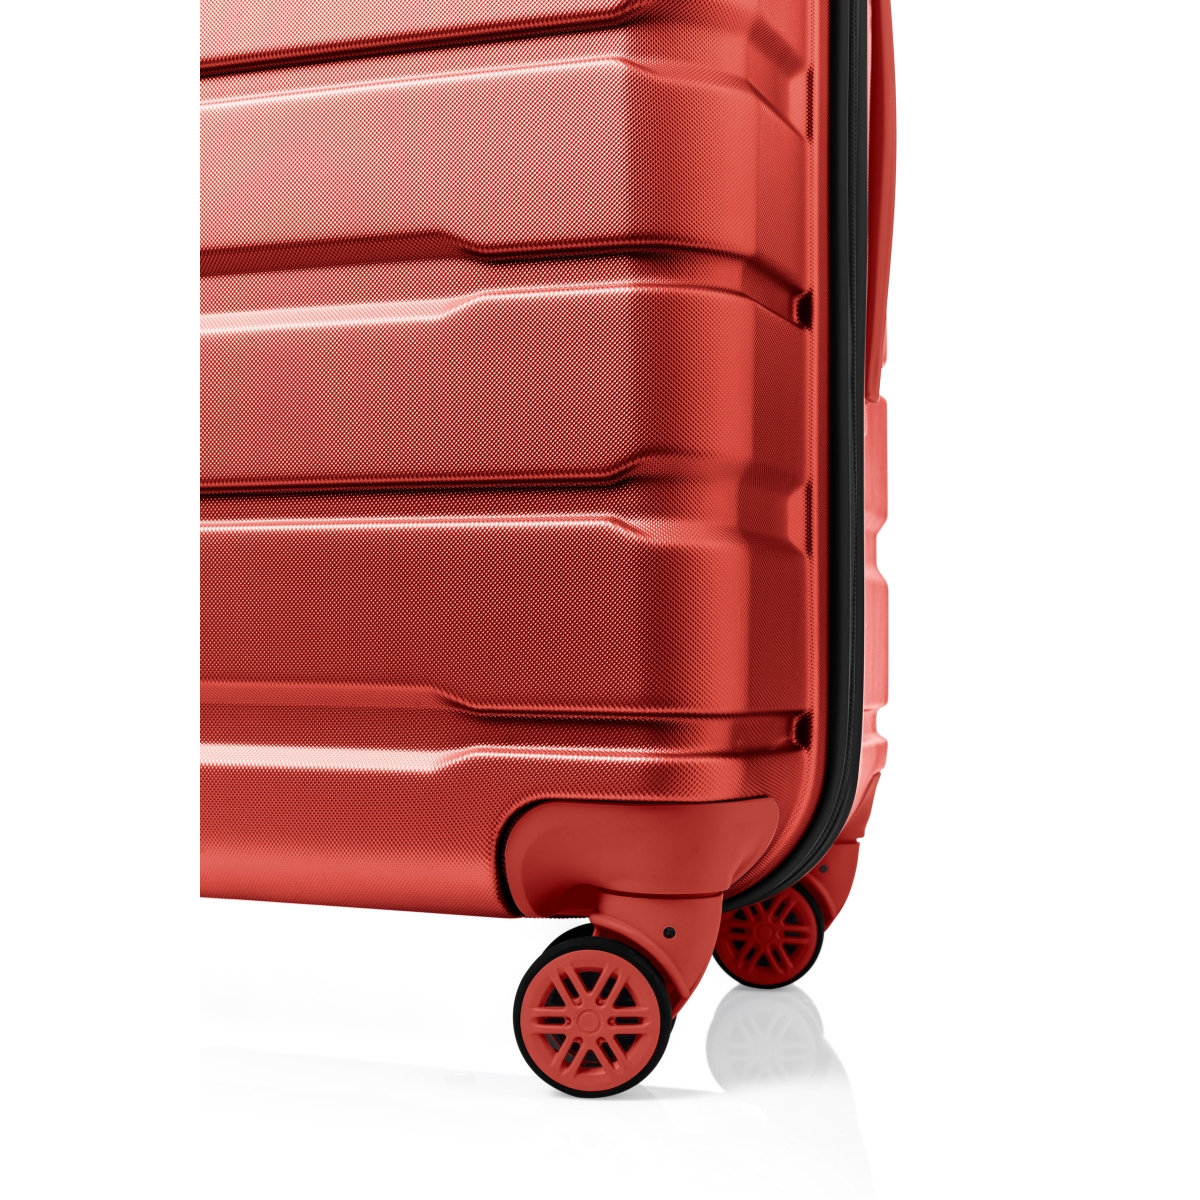 Gedox Abs Premium Tonaton 3'lü Valiz Seyahat Seti - Model:500.14 Kırmızı